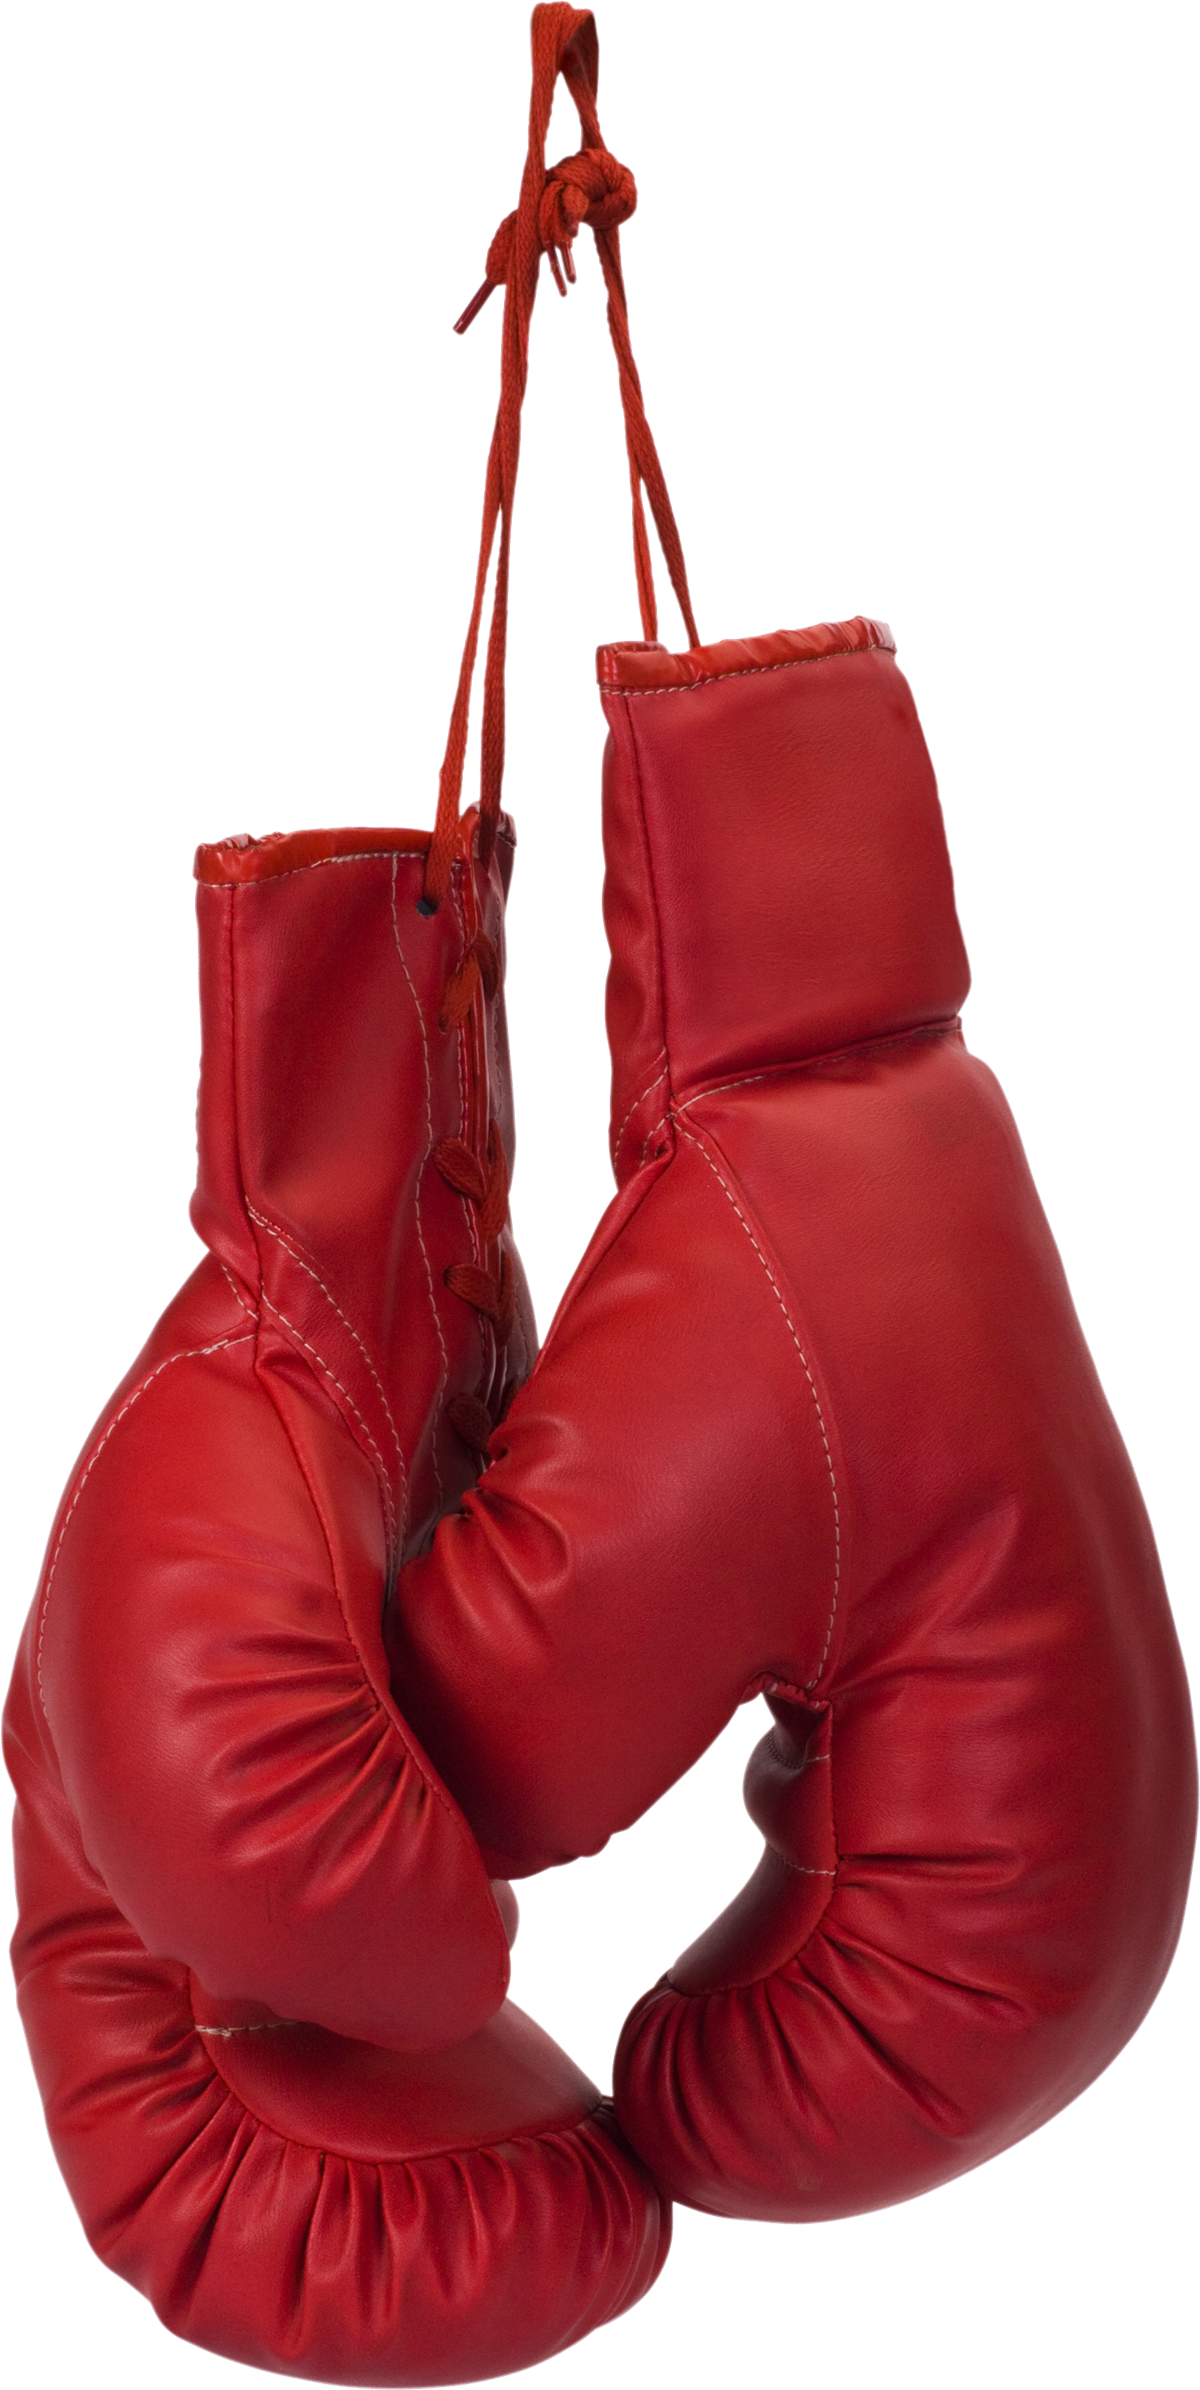 Rote Boxhandschuhe PNG Hochwertiges Bild